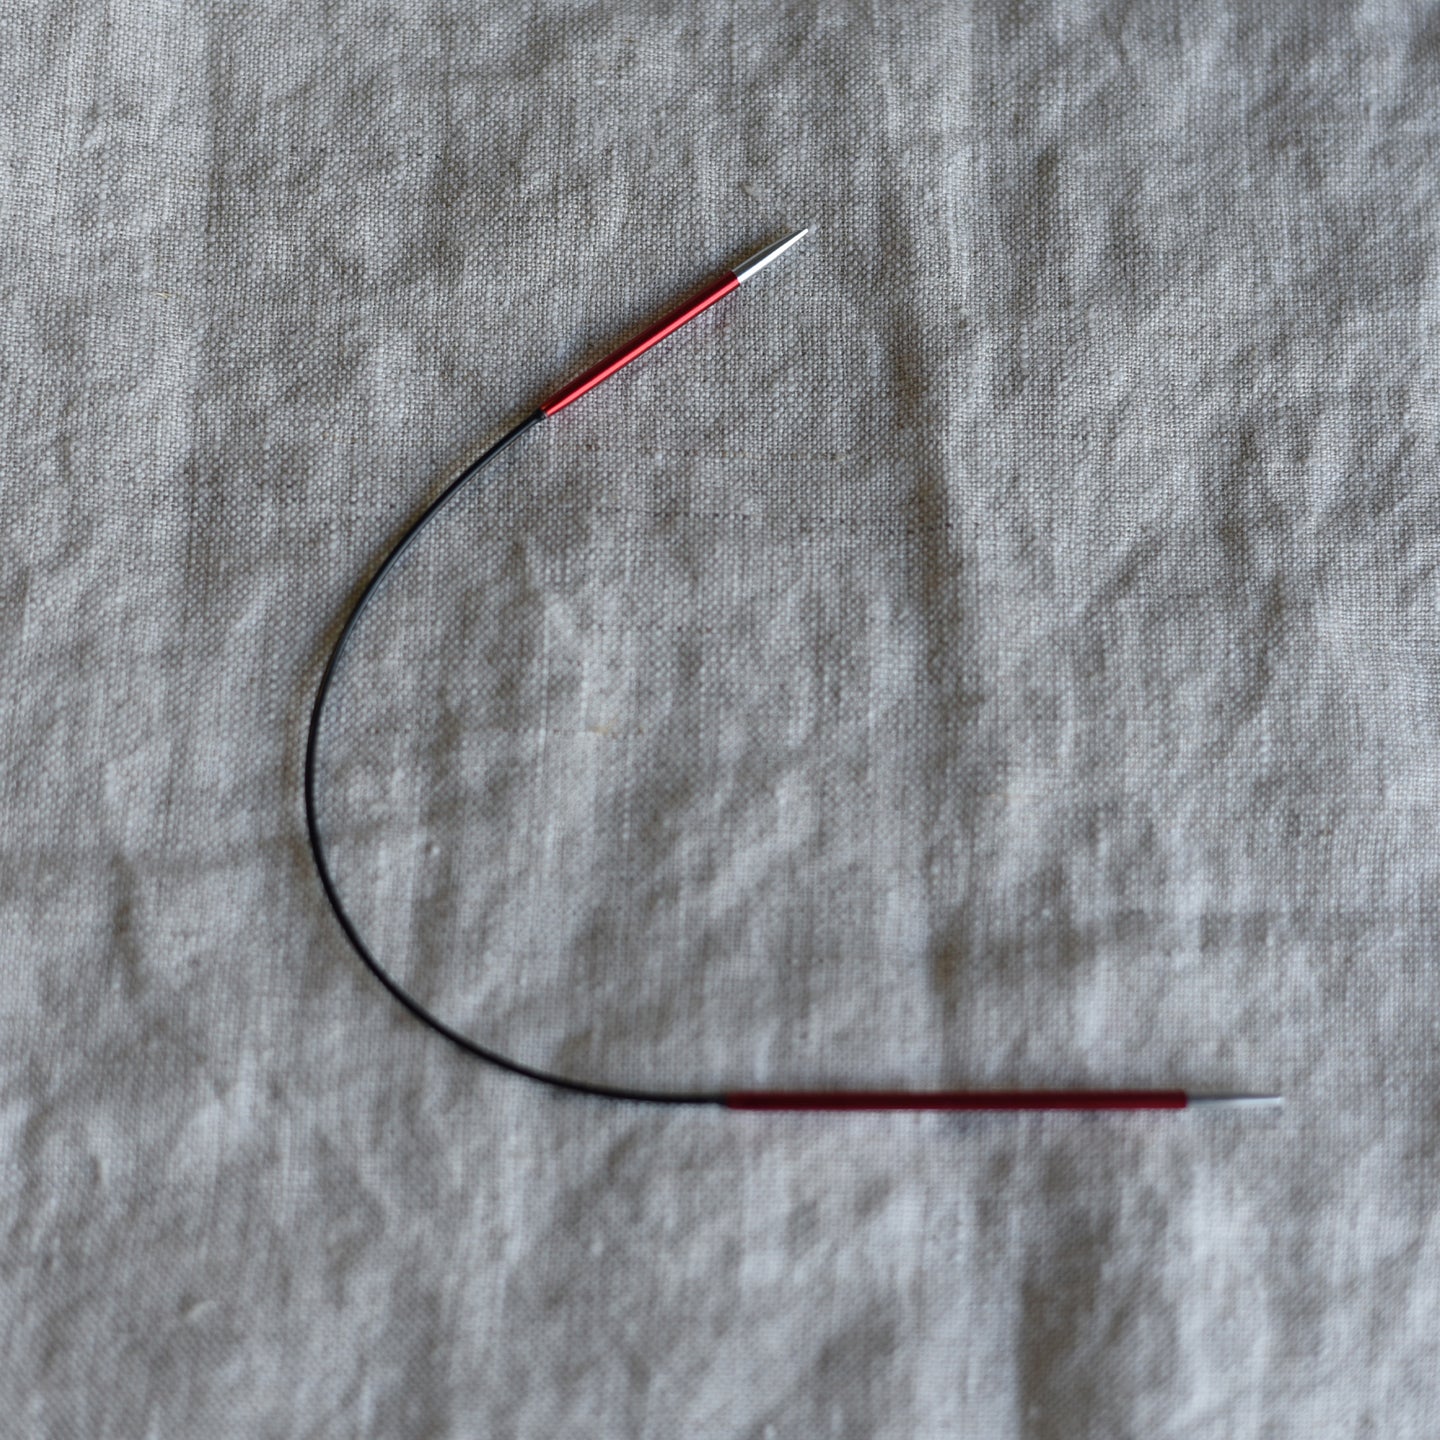 Knitpro Zing Sock cable needles - 2.5mm & 25cm length